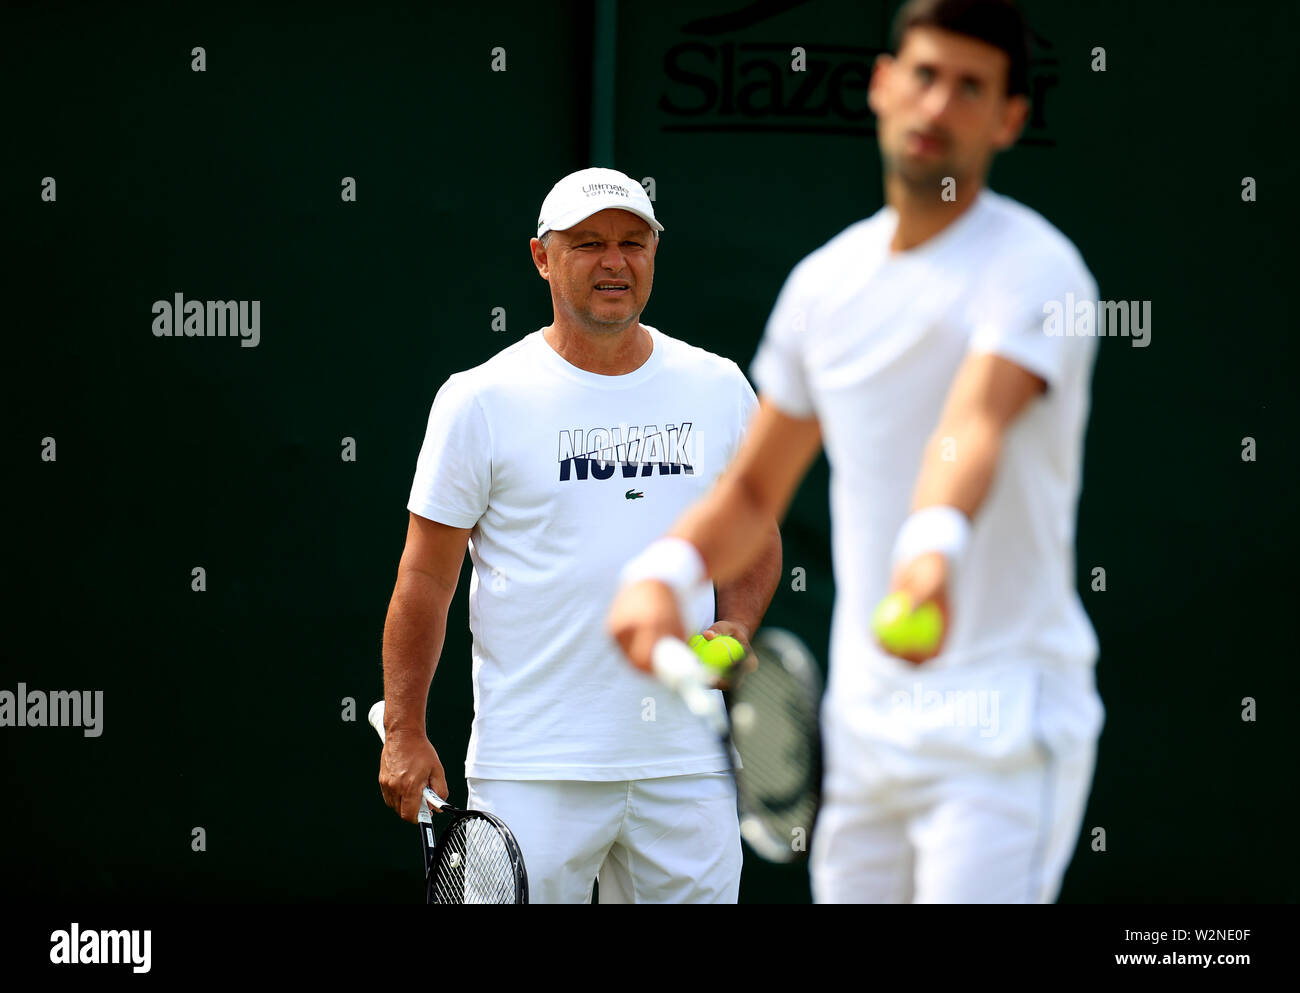 Novak Djokovic Coach High Resolution Stock Photography and Images  Alamy